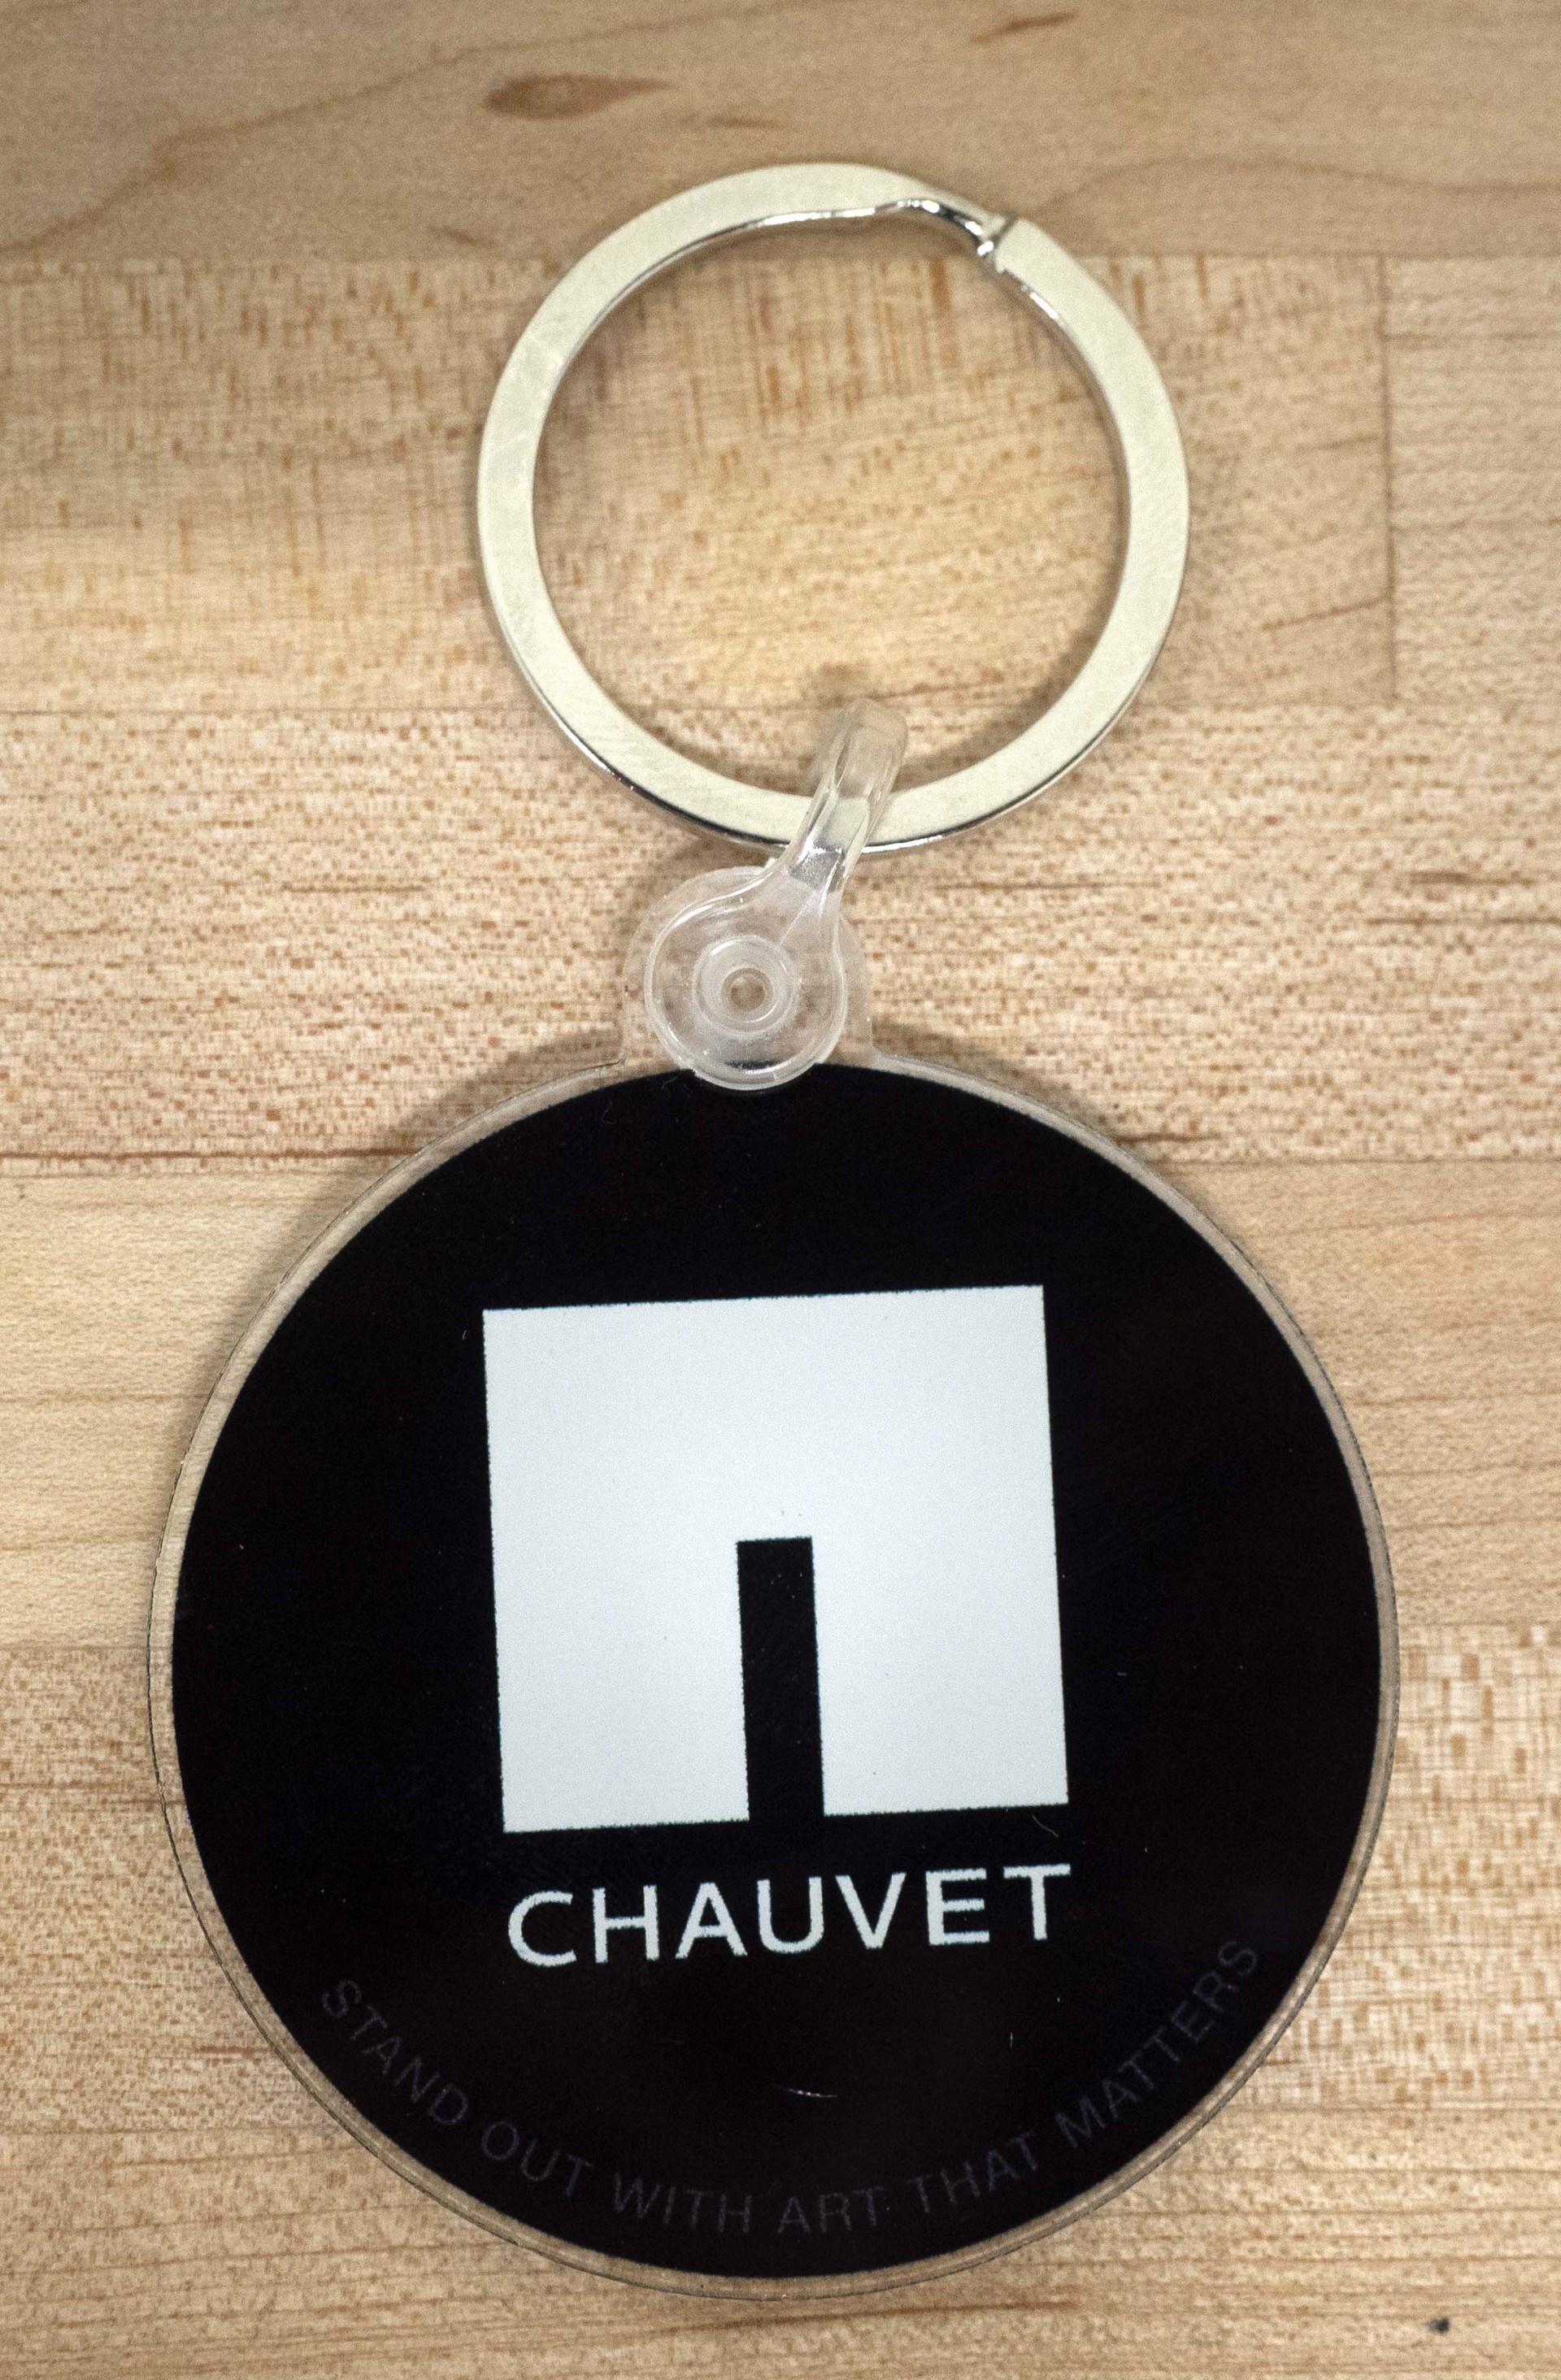 Chauvet Arts Key Chain by Chauvet Arts